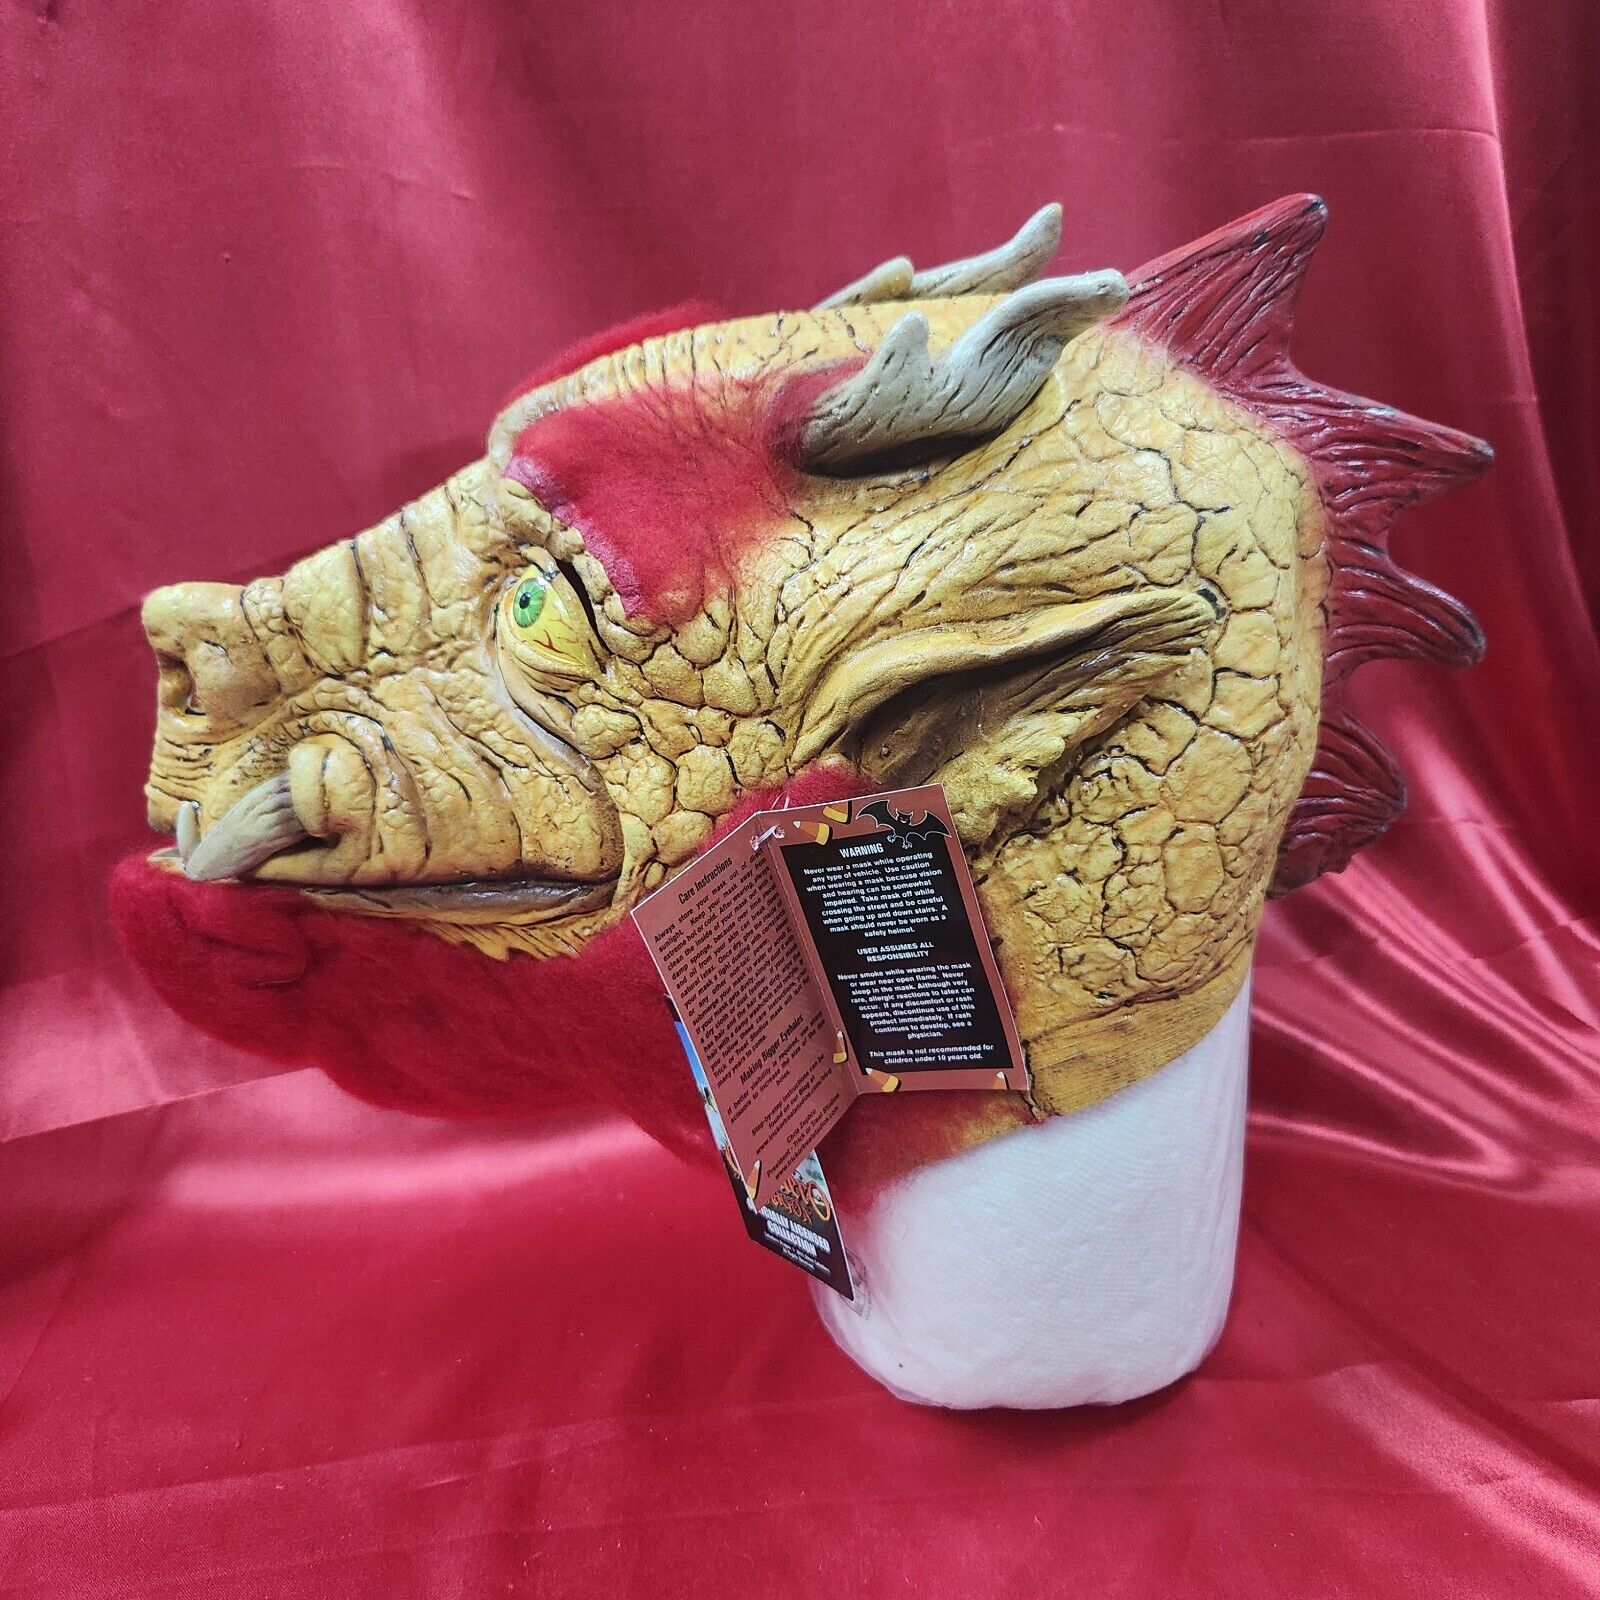 Steve Caballero Dragon Mask - From Trick or Treat Studios